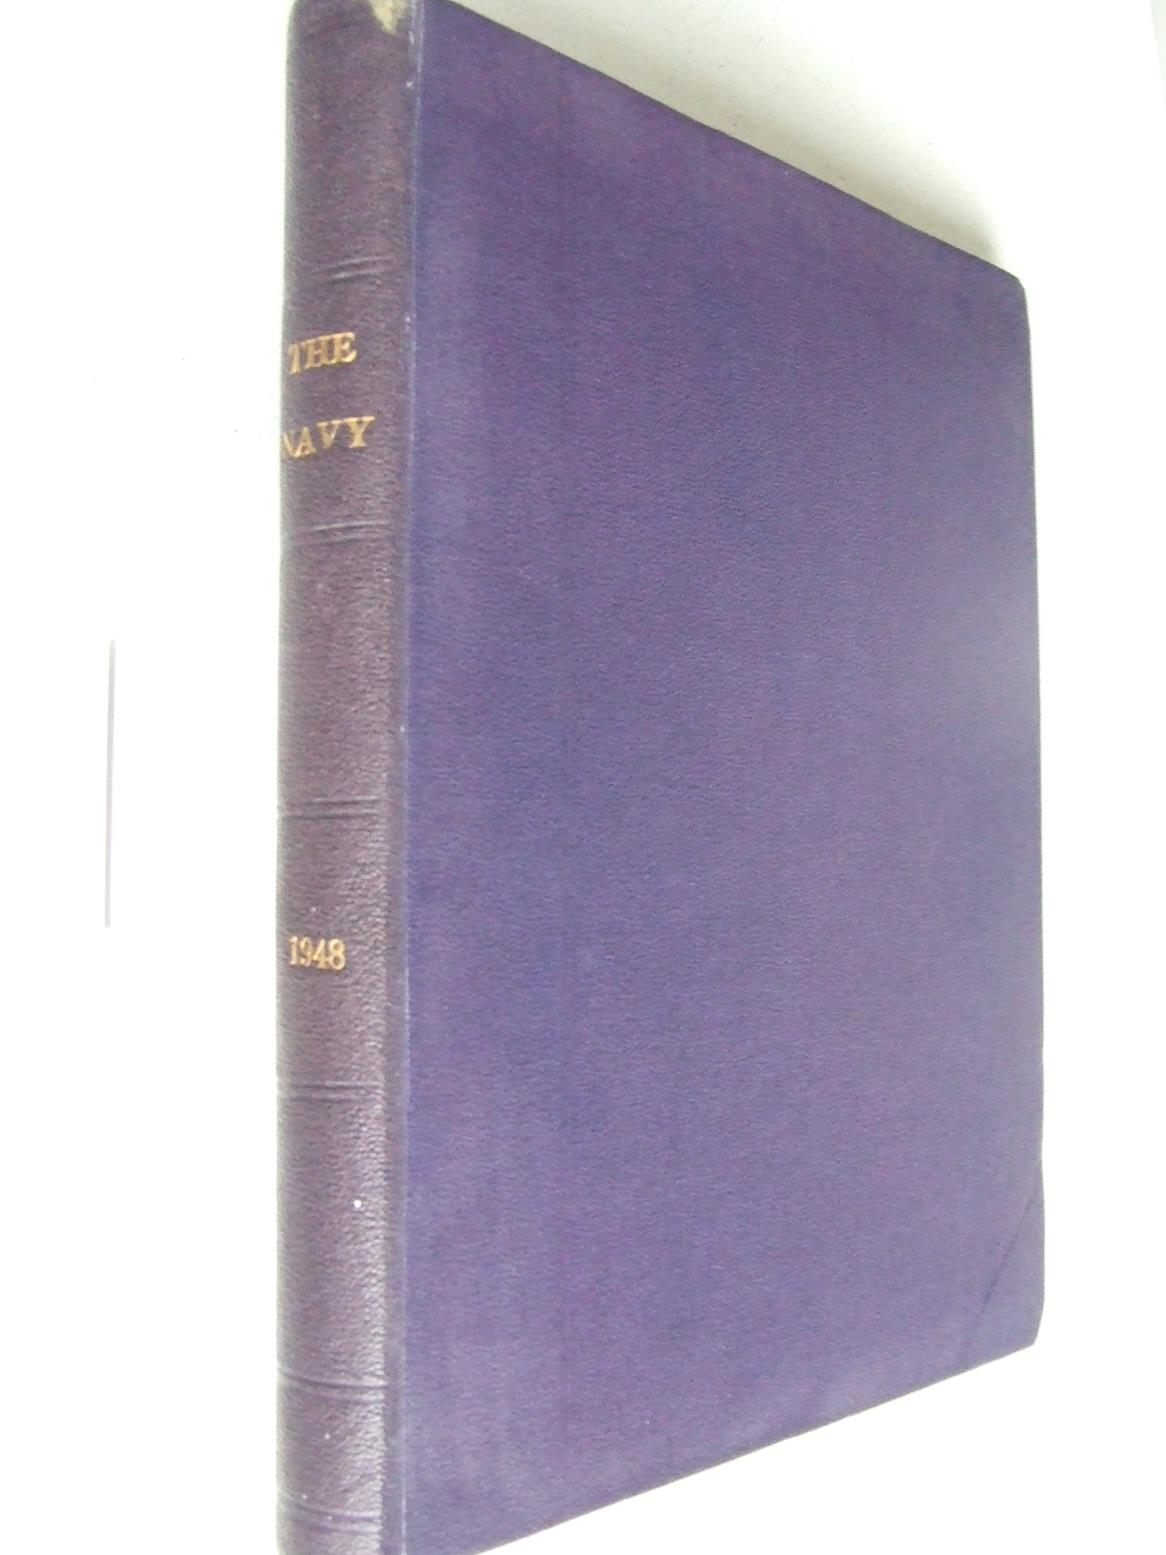 The Navy (organ of the Navy League). volume LIII [53]